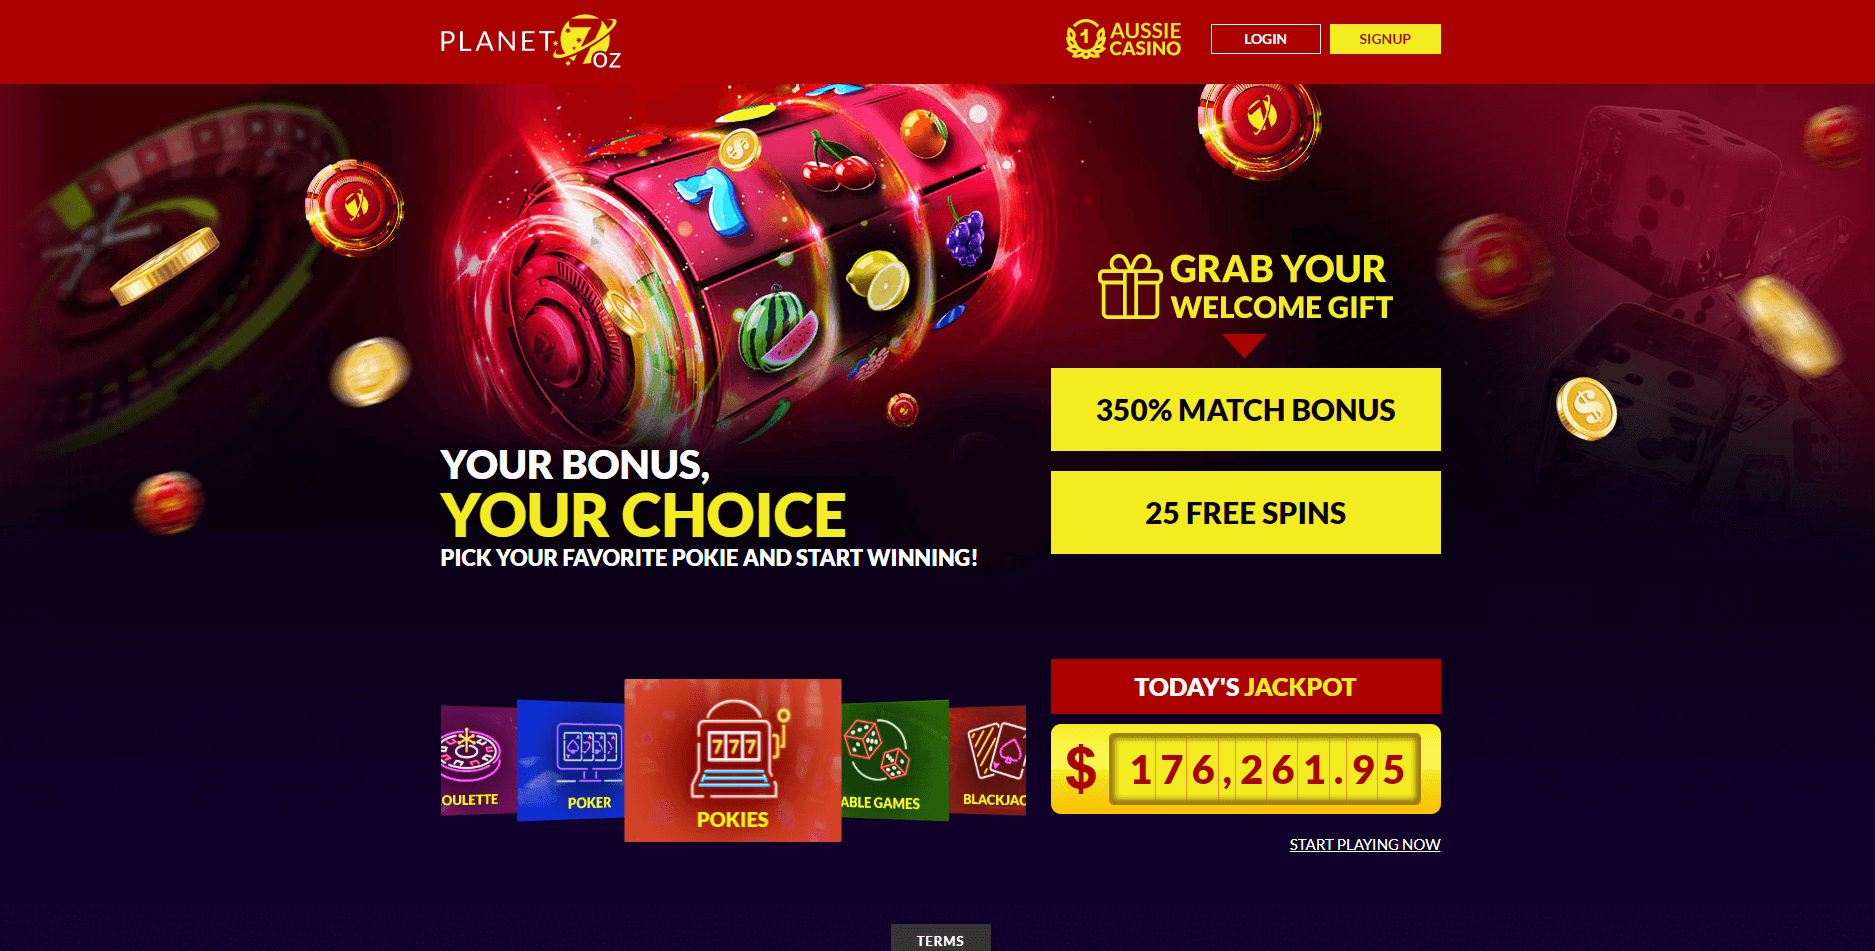 brand new online casinos with no deposit bonus codes